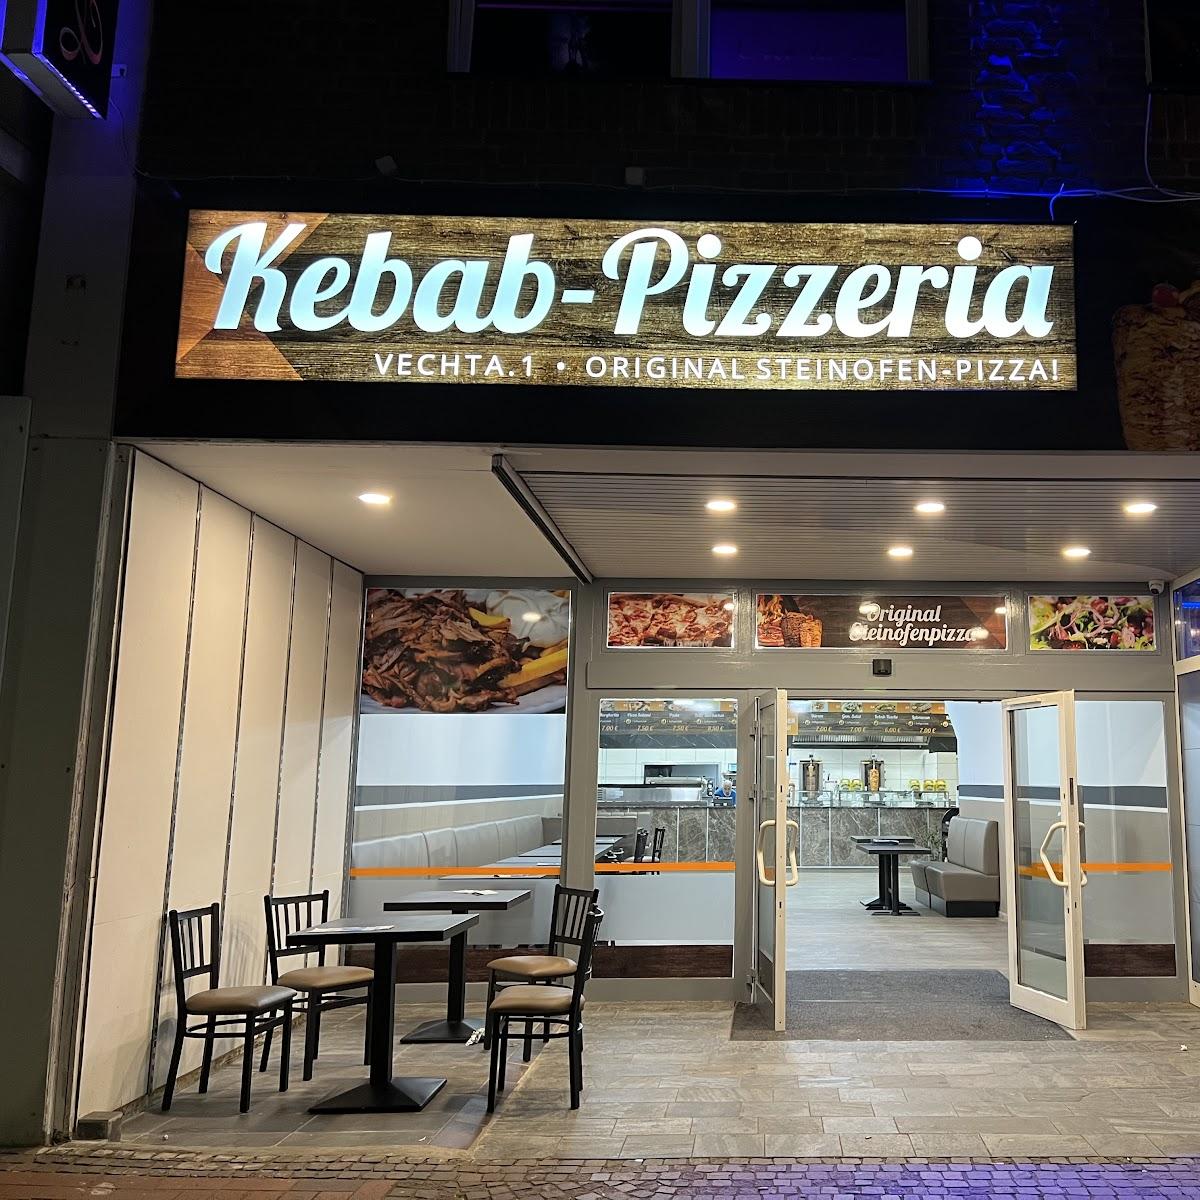 Restaurant ".1 Kebab & Pizzeria" in Vechta